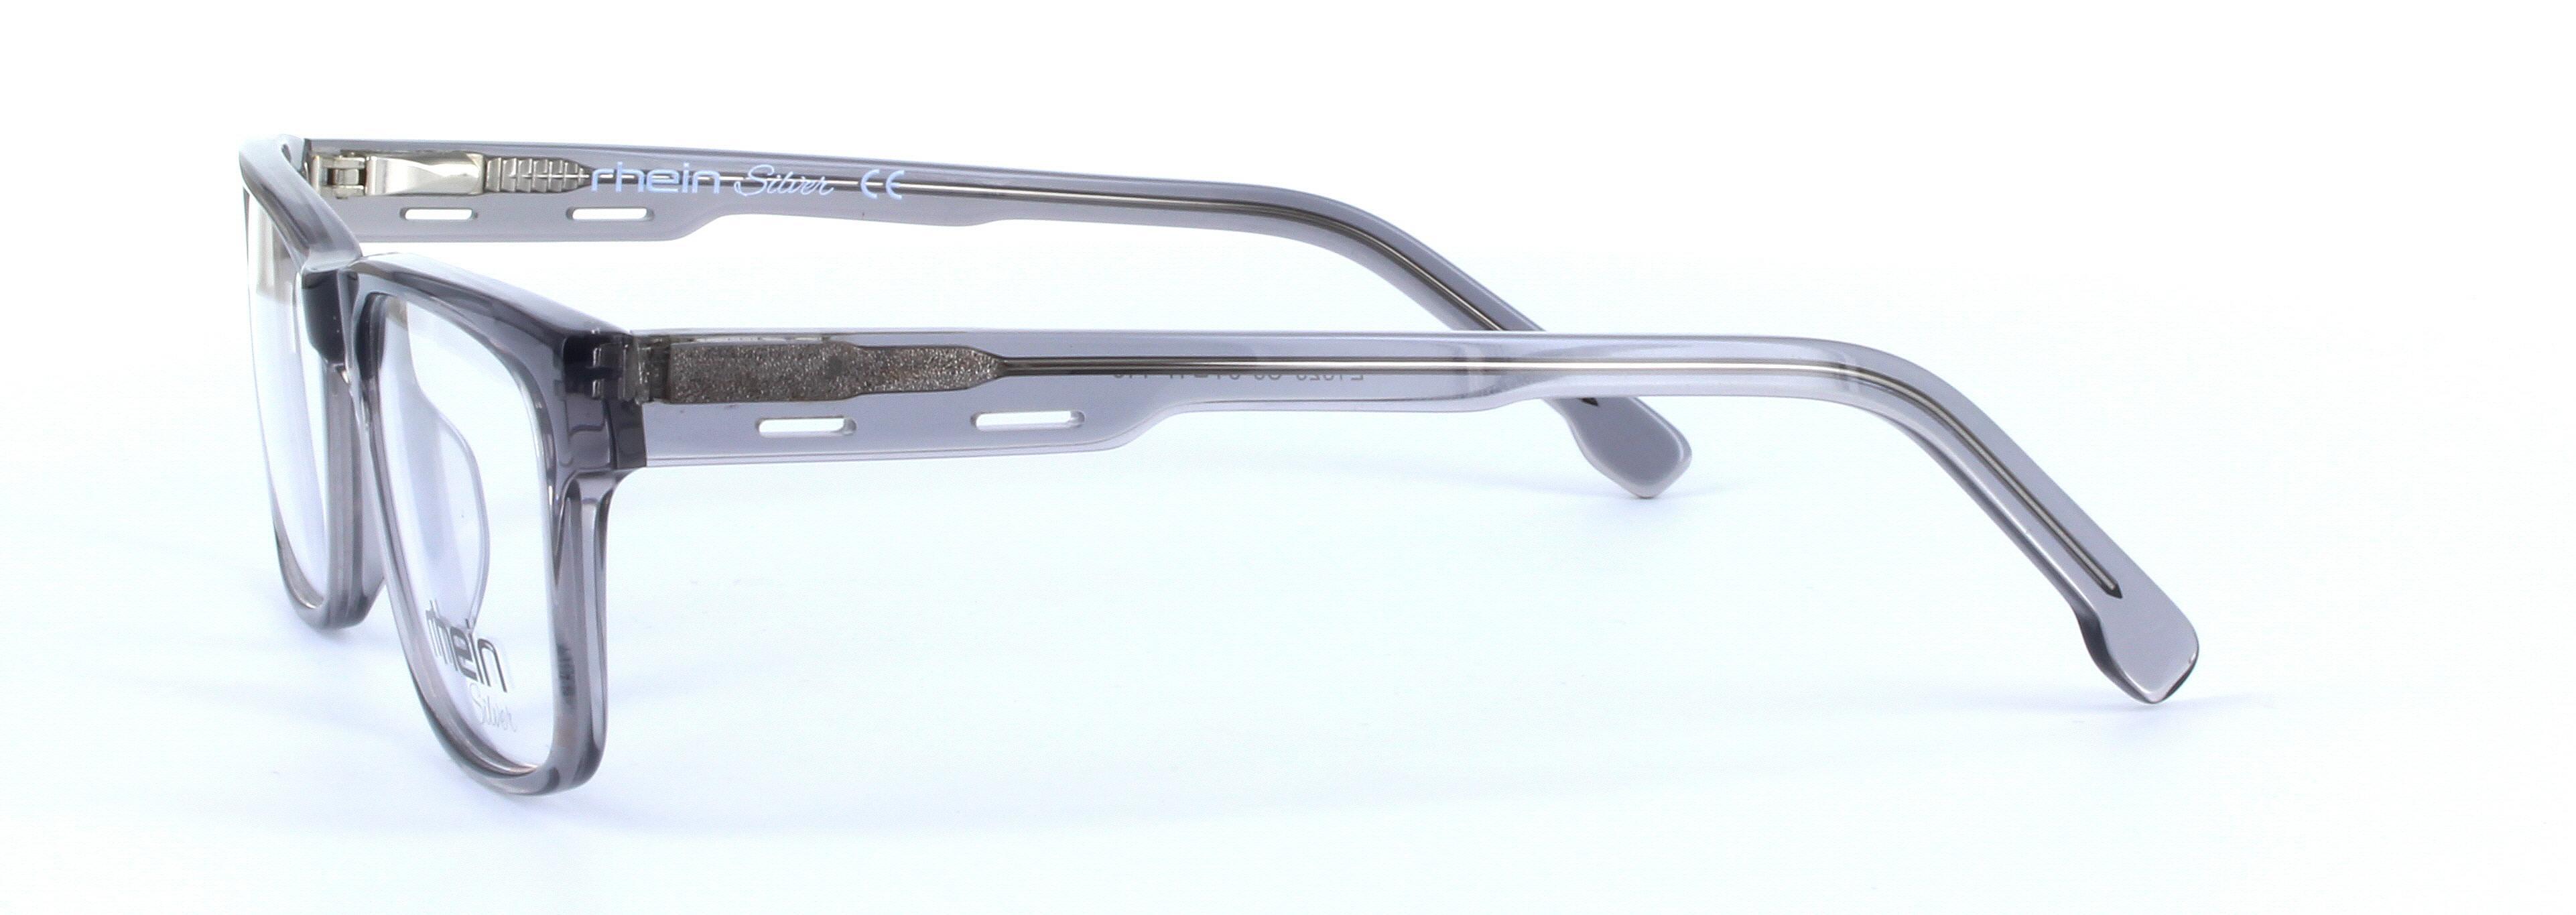 Cygnus Blue Full Rim Rectangular Plastic Glasses - Image View 2